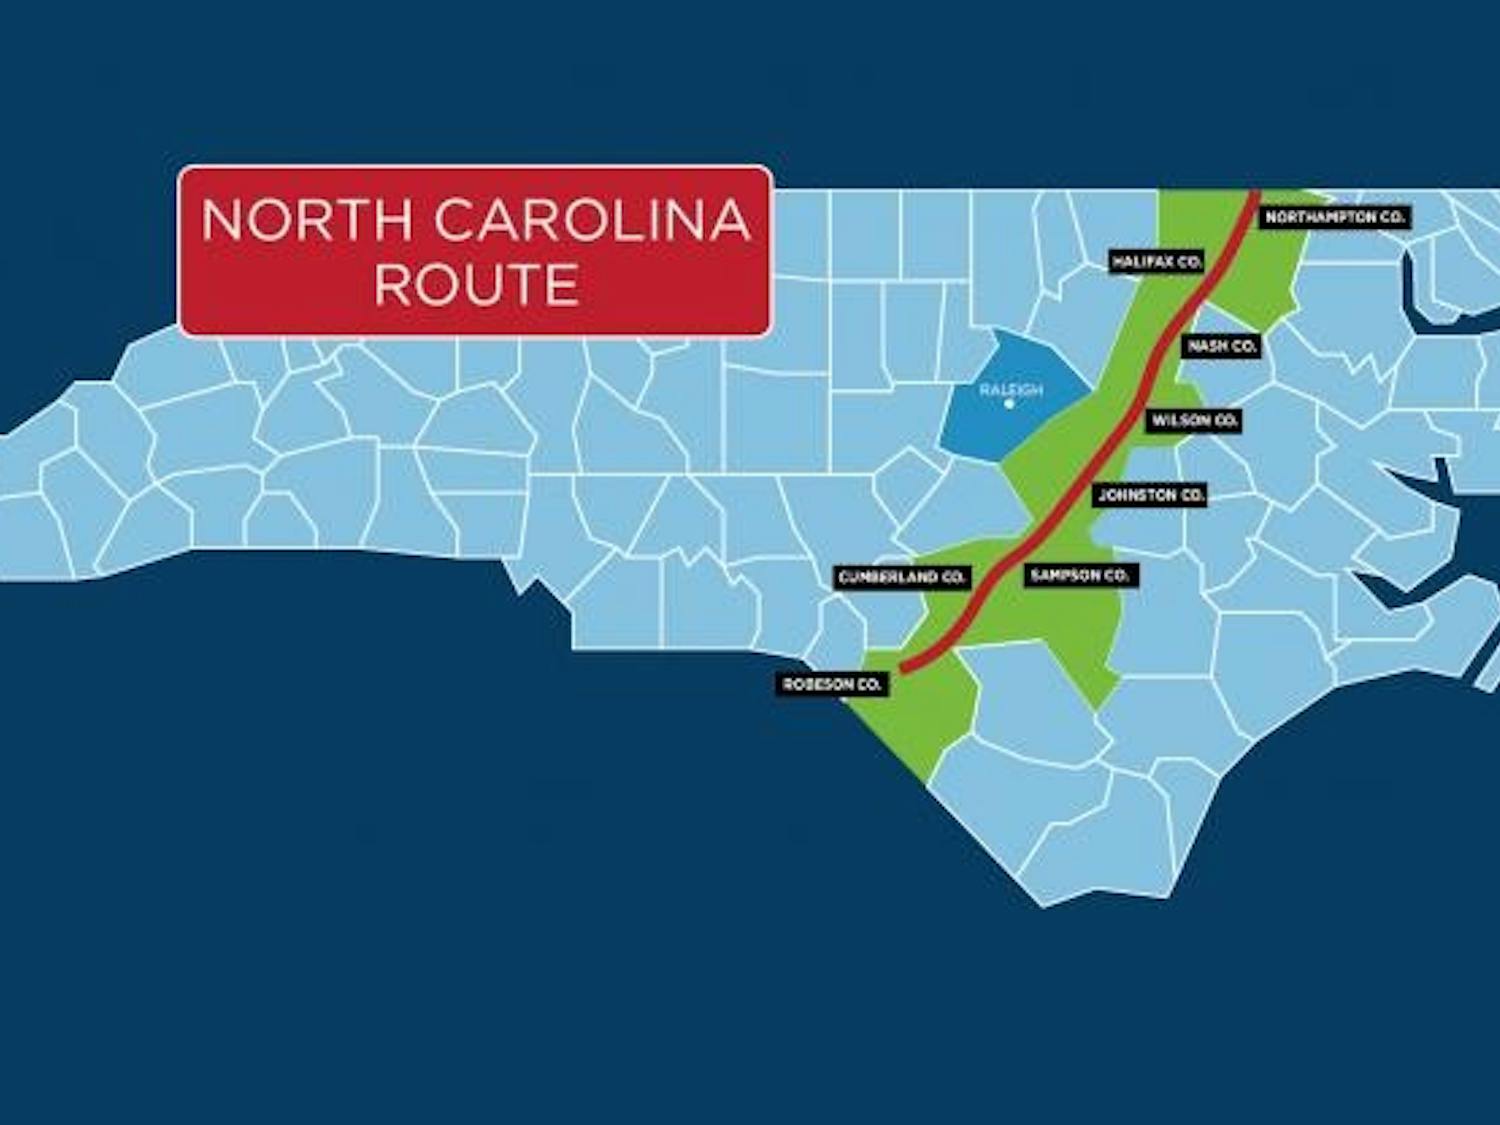 The Atlantic Coast Pipeline will cross through several North Carolina counties. Photo courtesy of N.C. DEQ